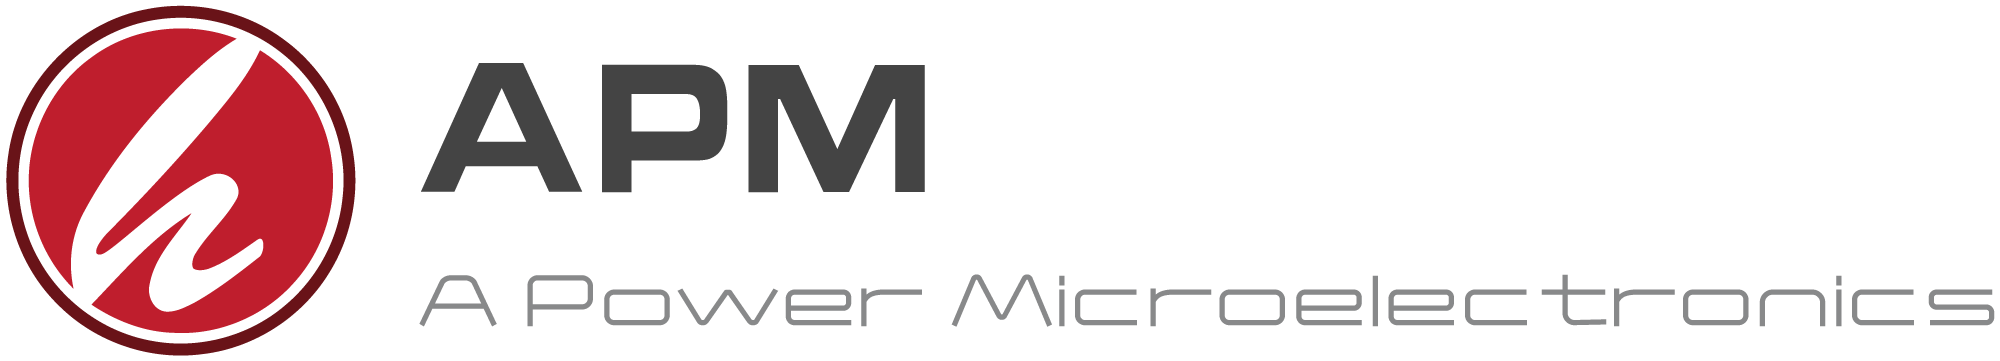 APM-Microelectronics